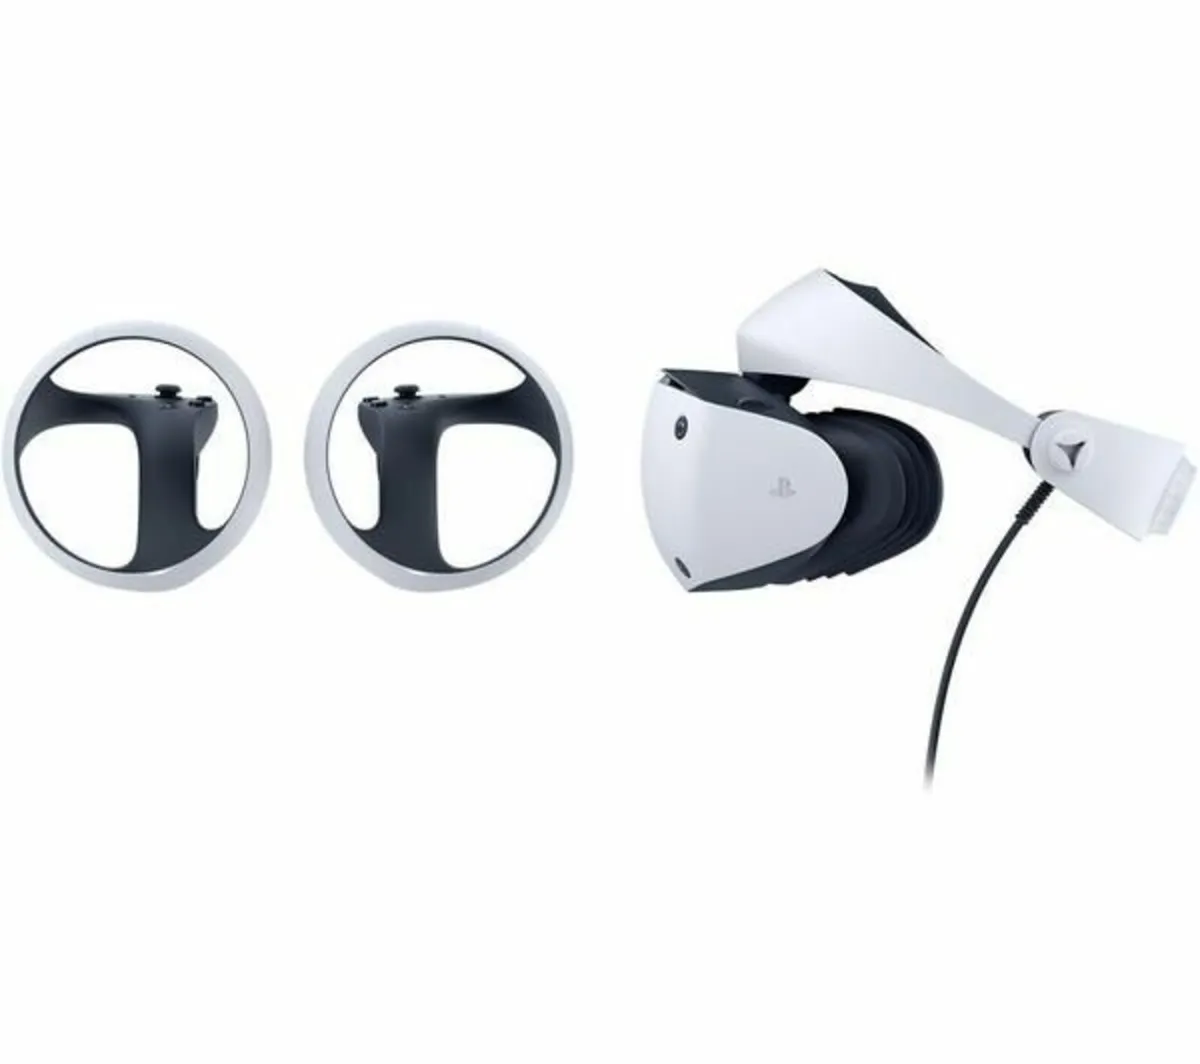 Practically New PlayStation VR2 Set - Under Guaran